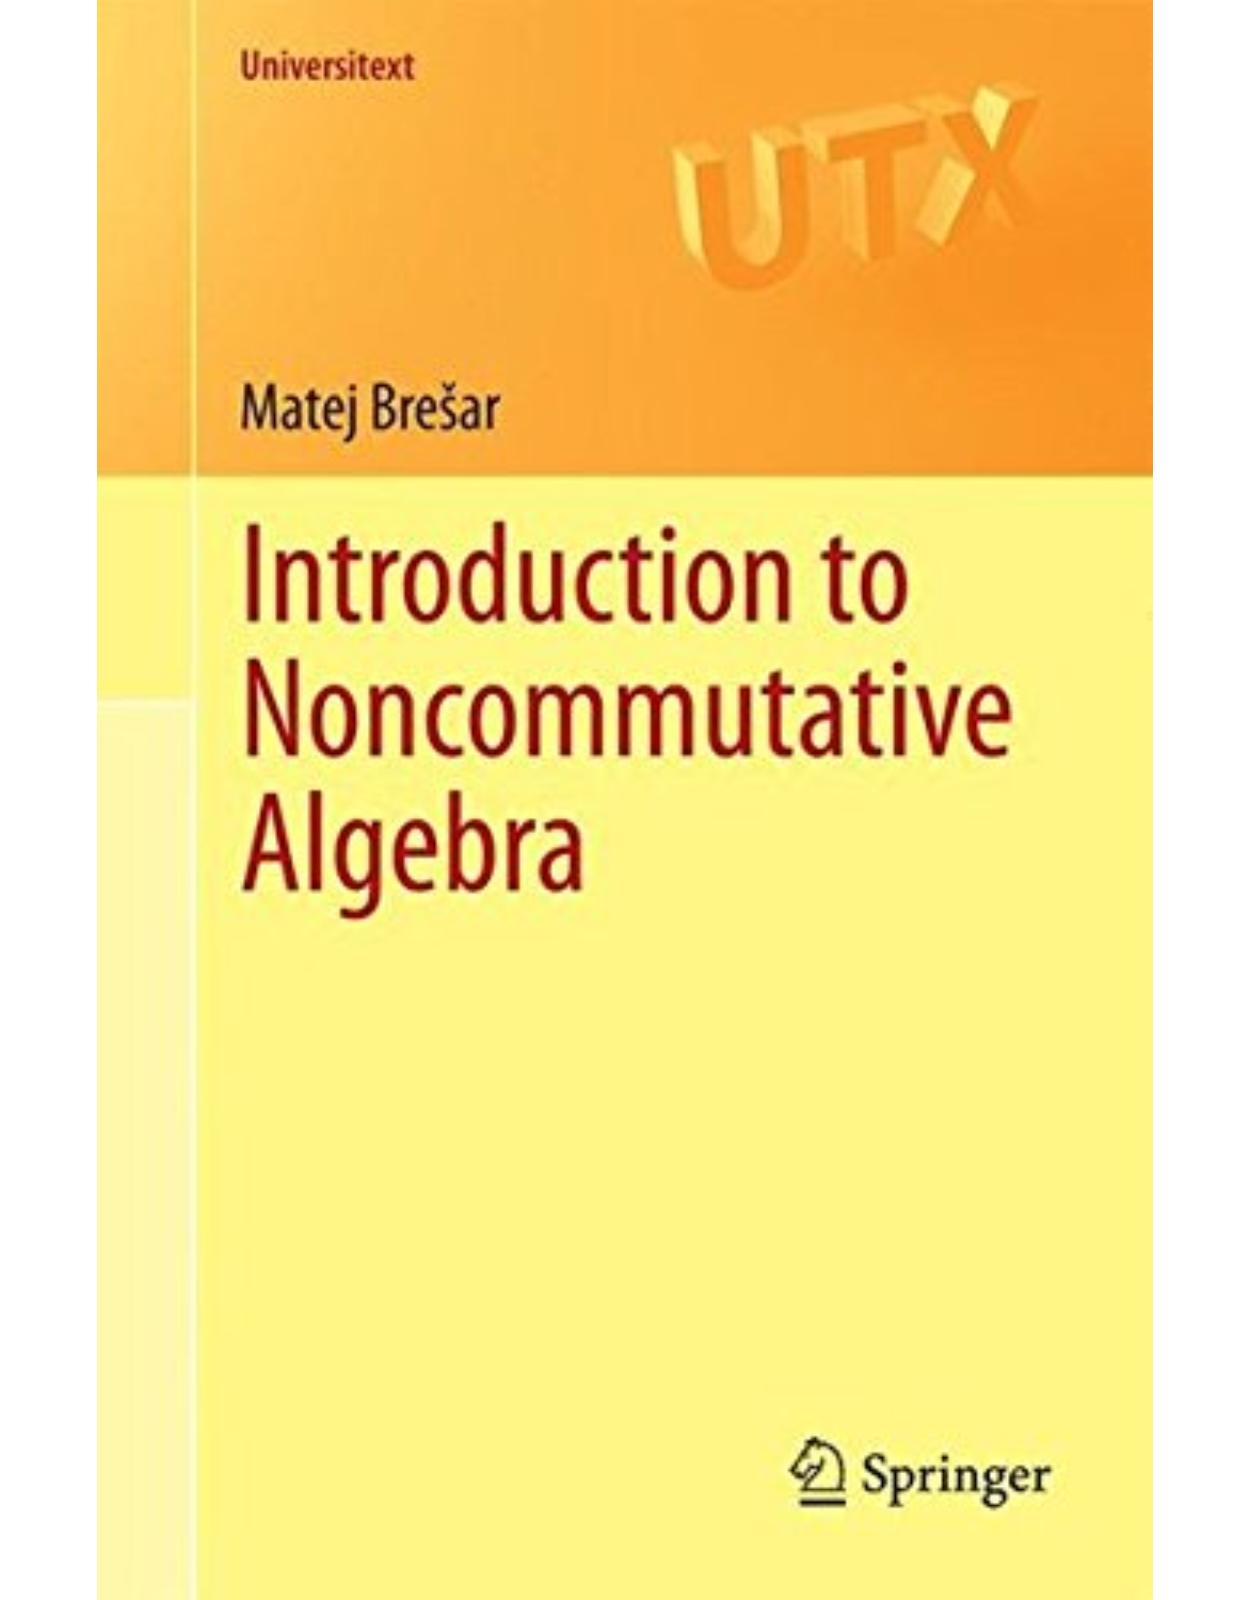 Introduction to Noncommutative Algebra